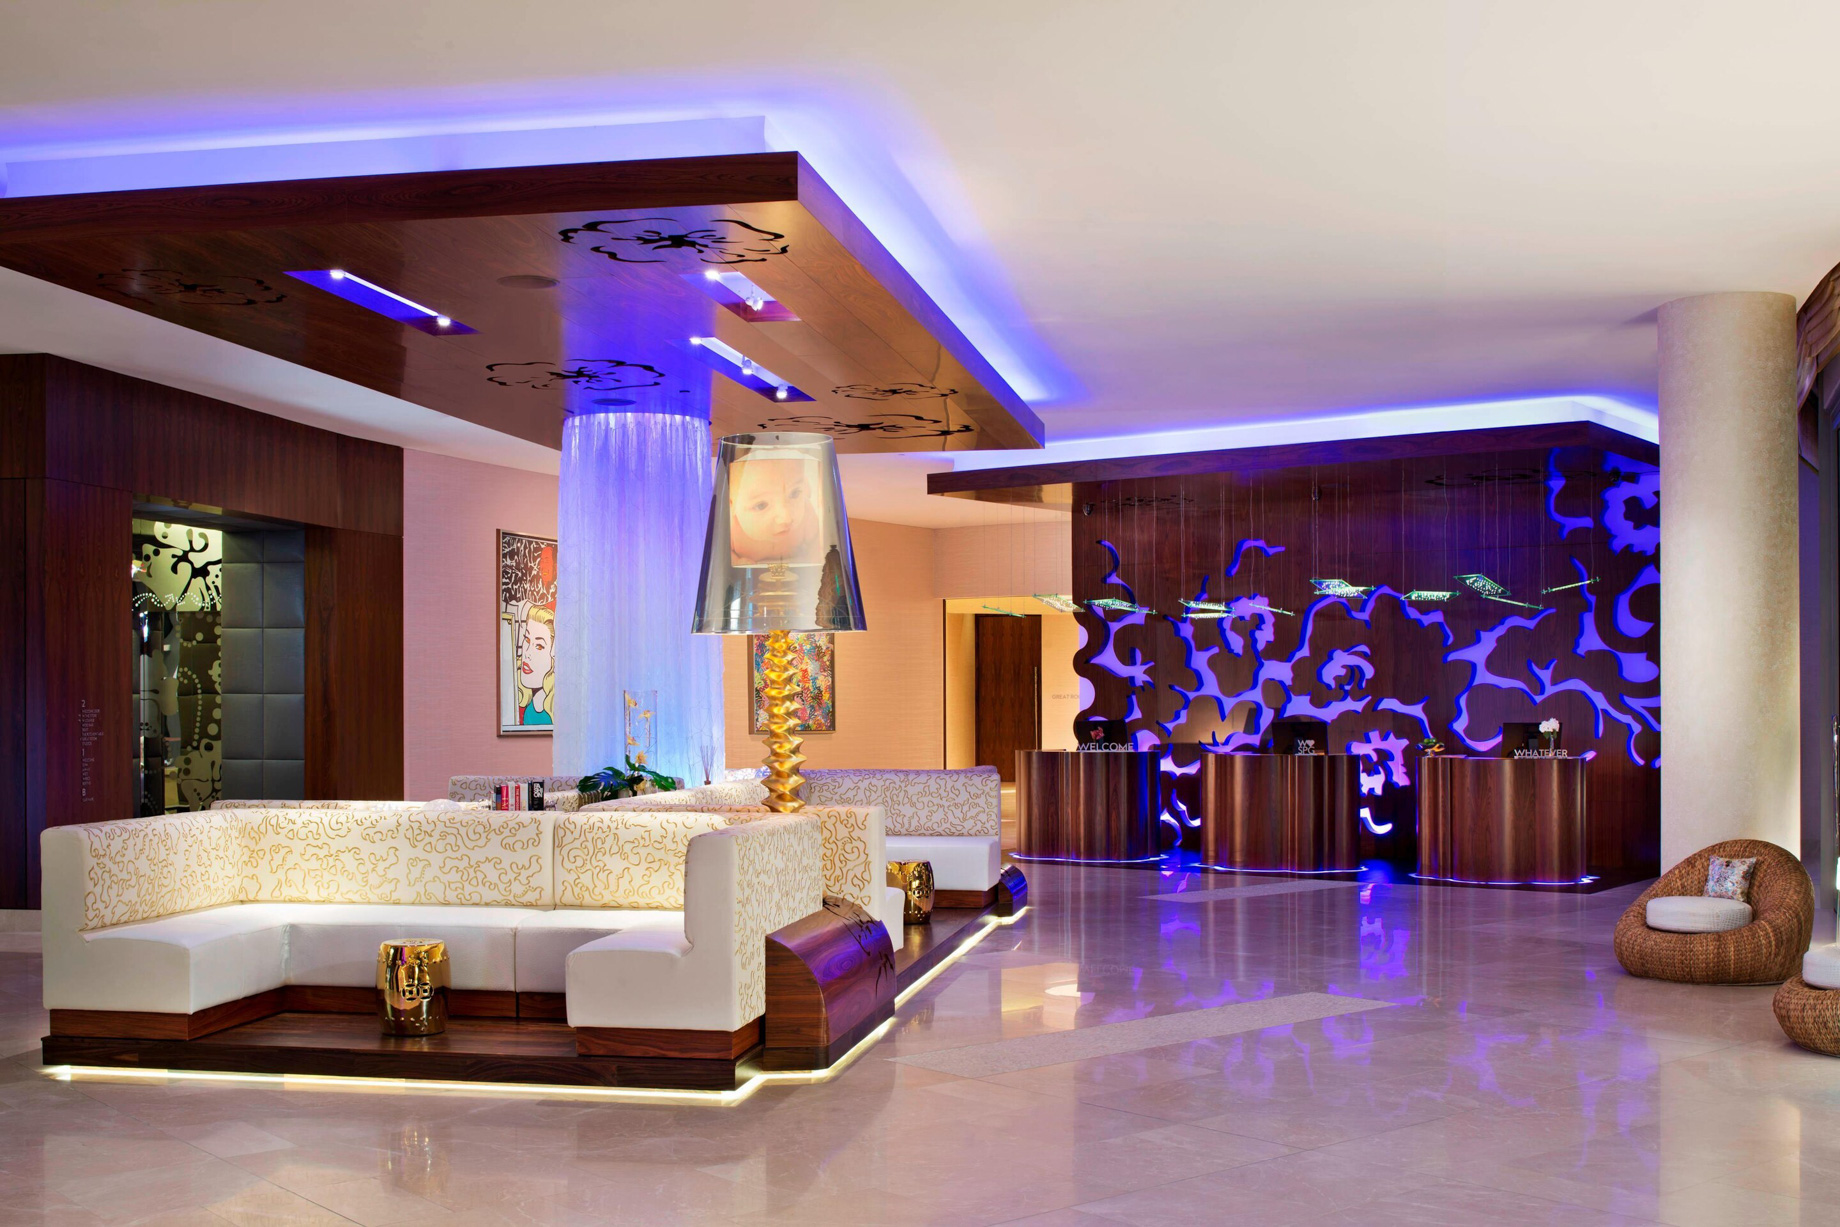 W Singapore Sentosa Cove Hotel – Singapore – W Lounge Seating